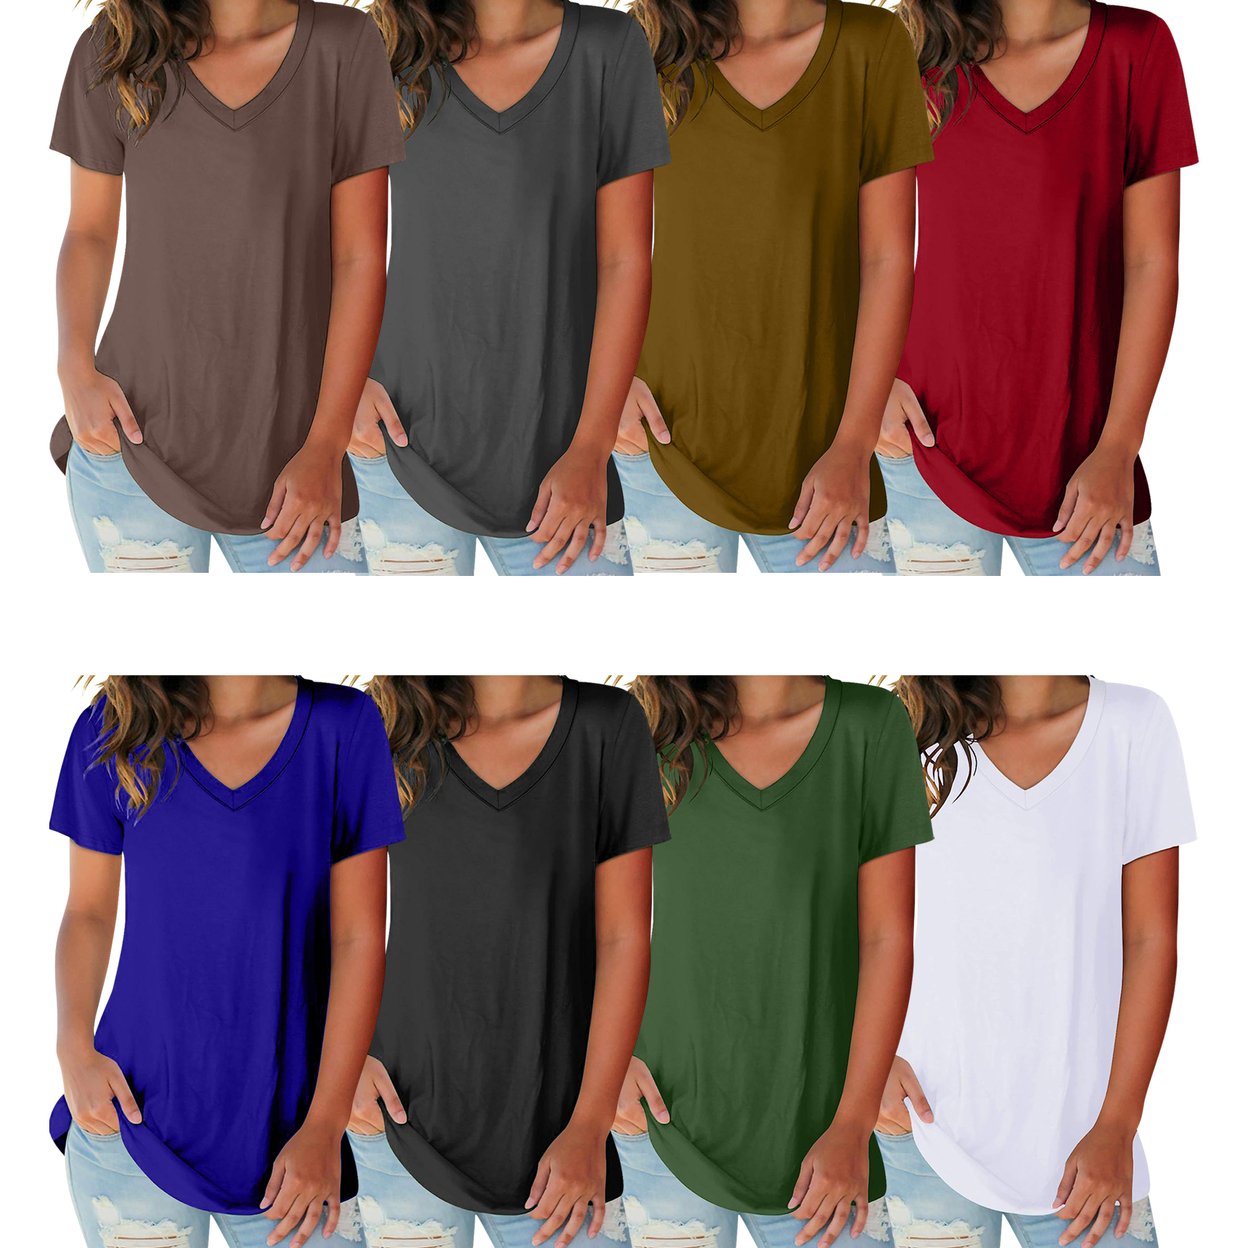 6-Pack: Women's Ultra Soft Smooth Cotton Blend Basic V-Neck Short Sleeve Shirts - X-large